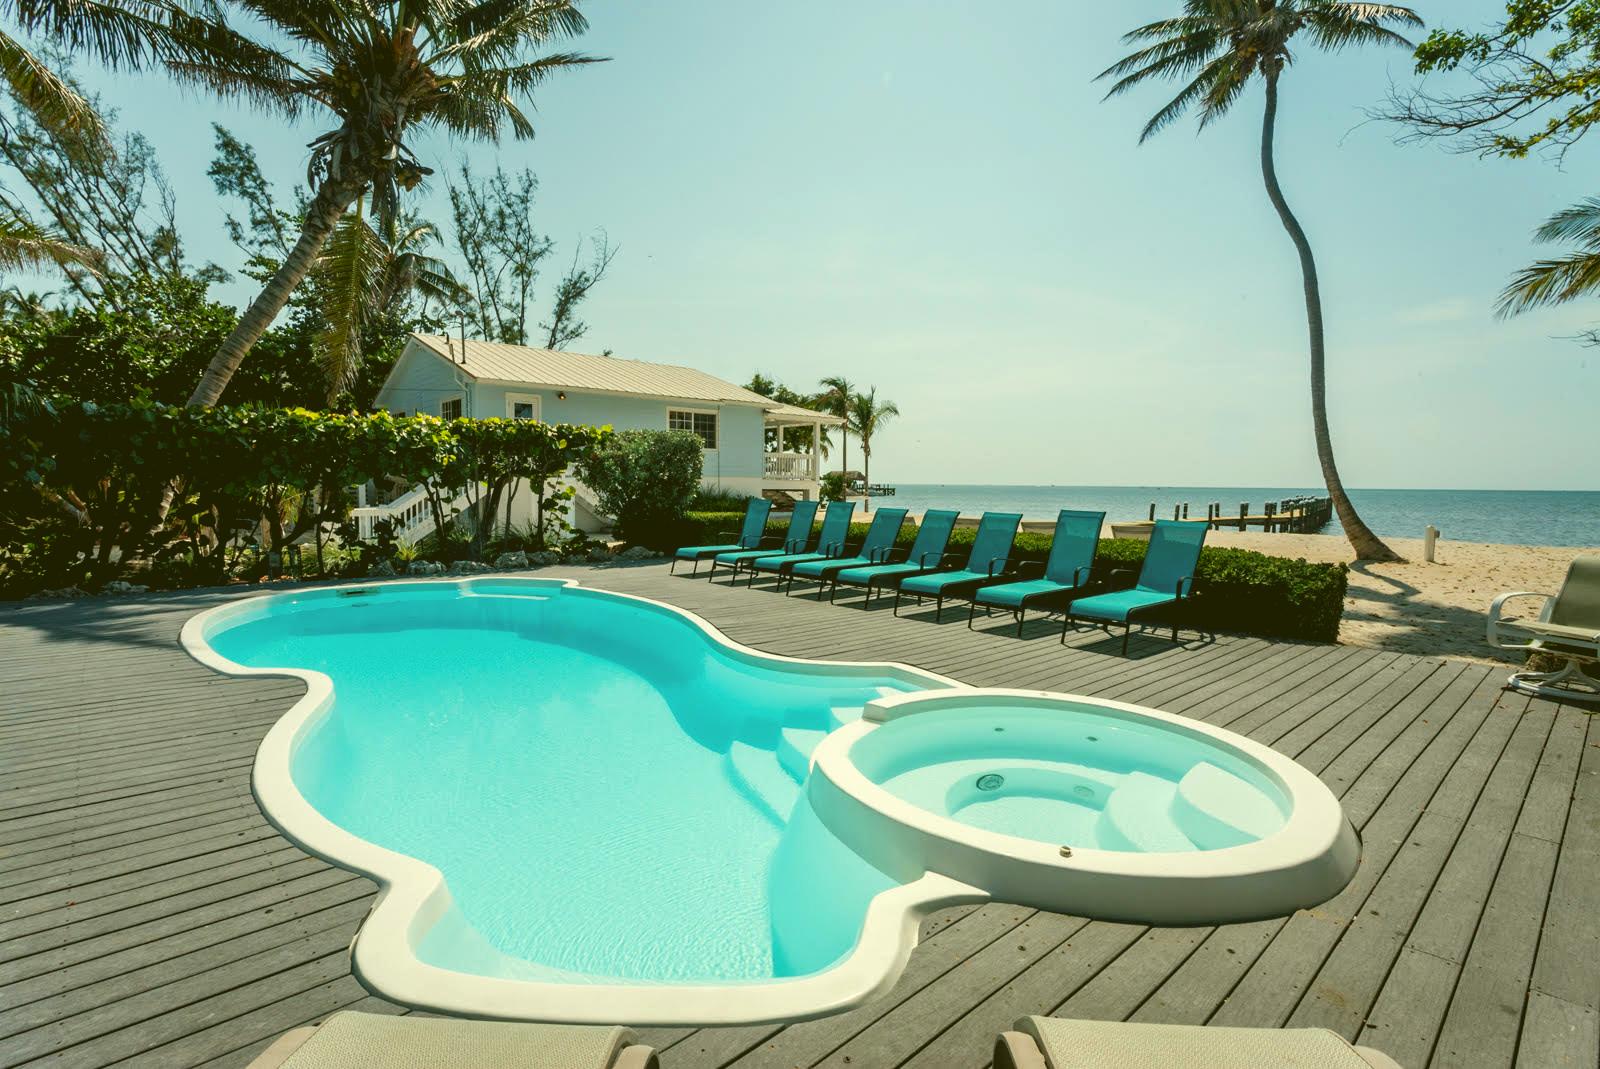 Island Villa - Luxury Vacation Rentals in the Florida Keys